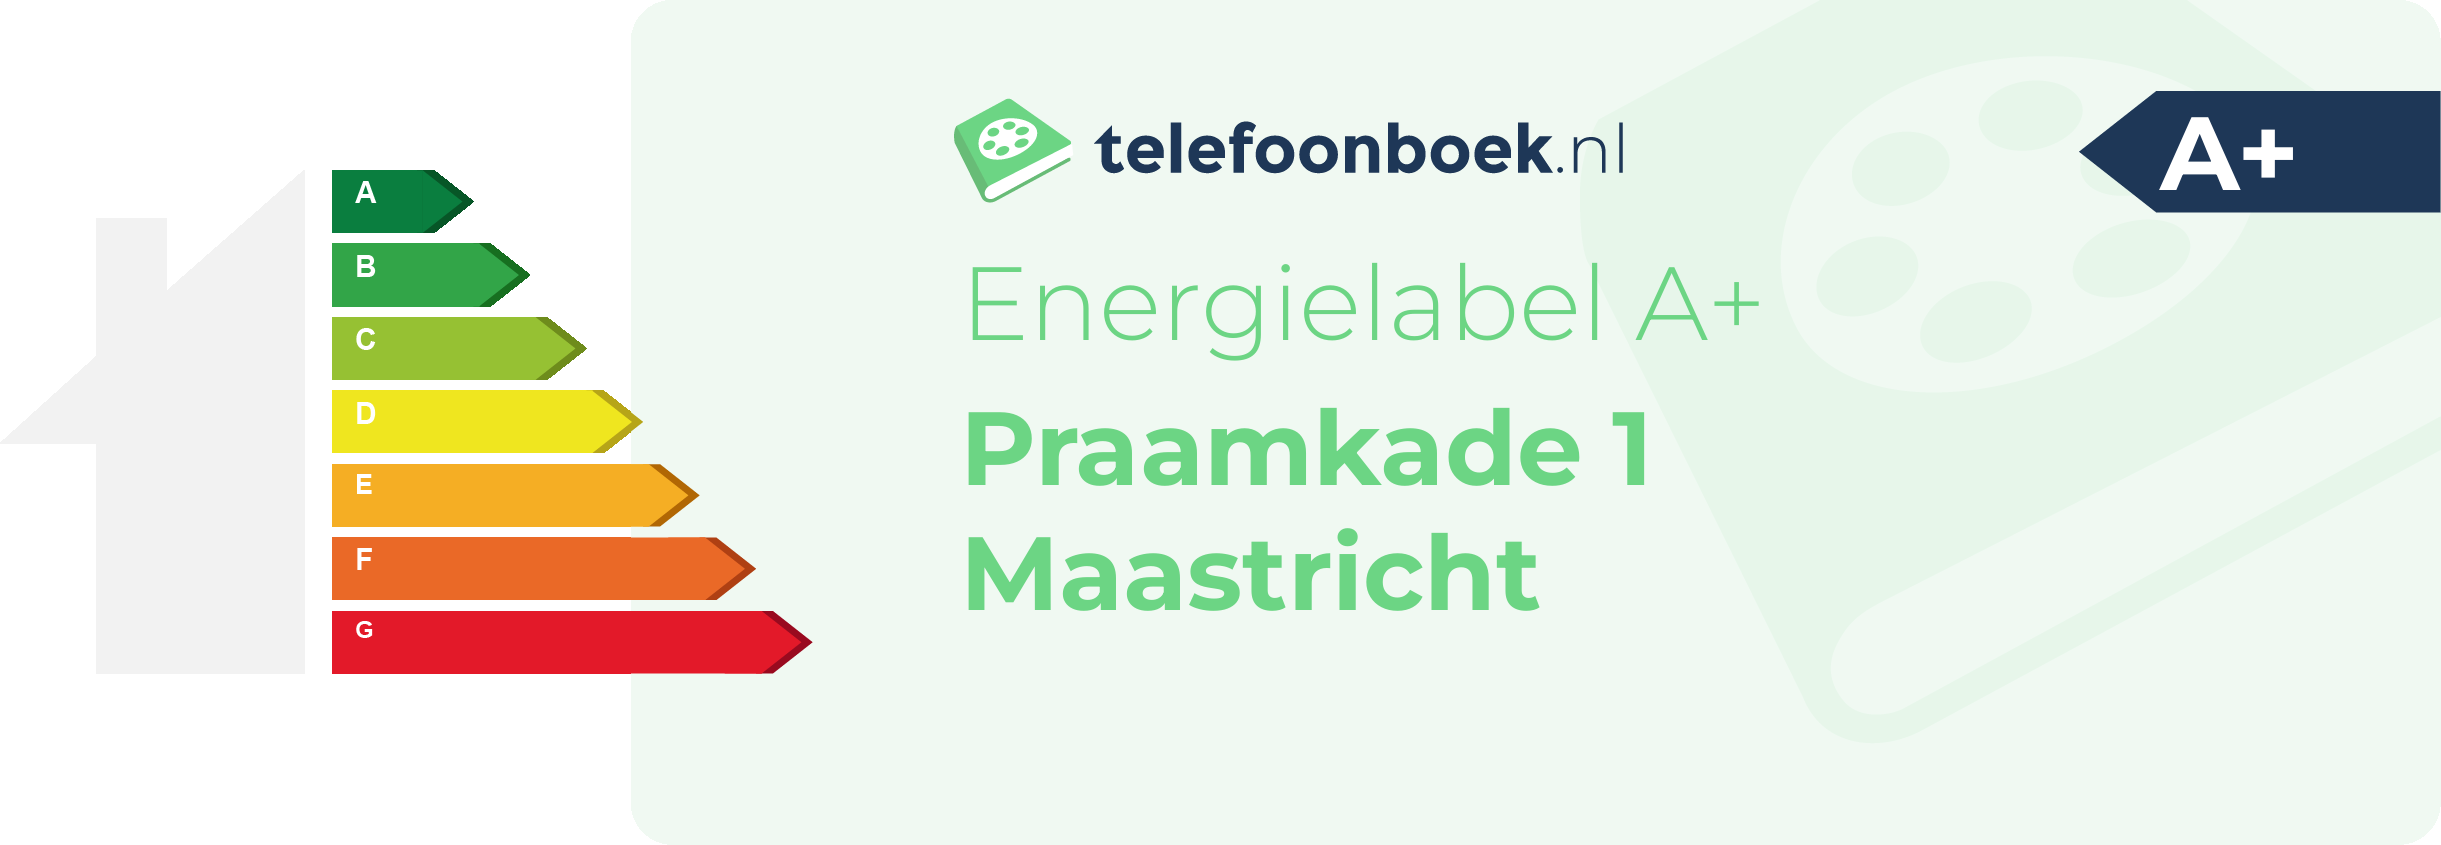 Energielabel Praamkade 1 Maastricht